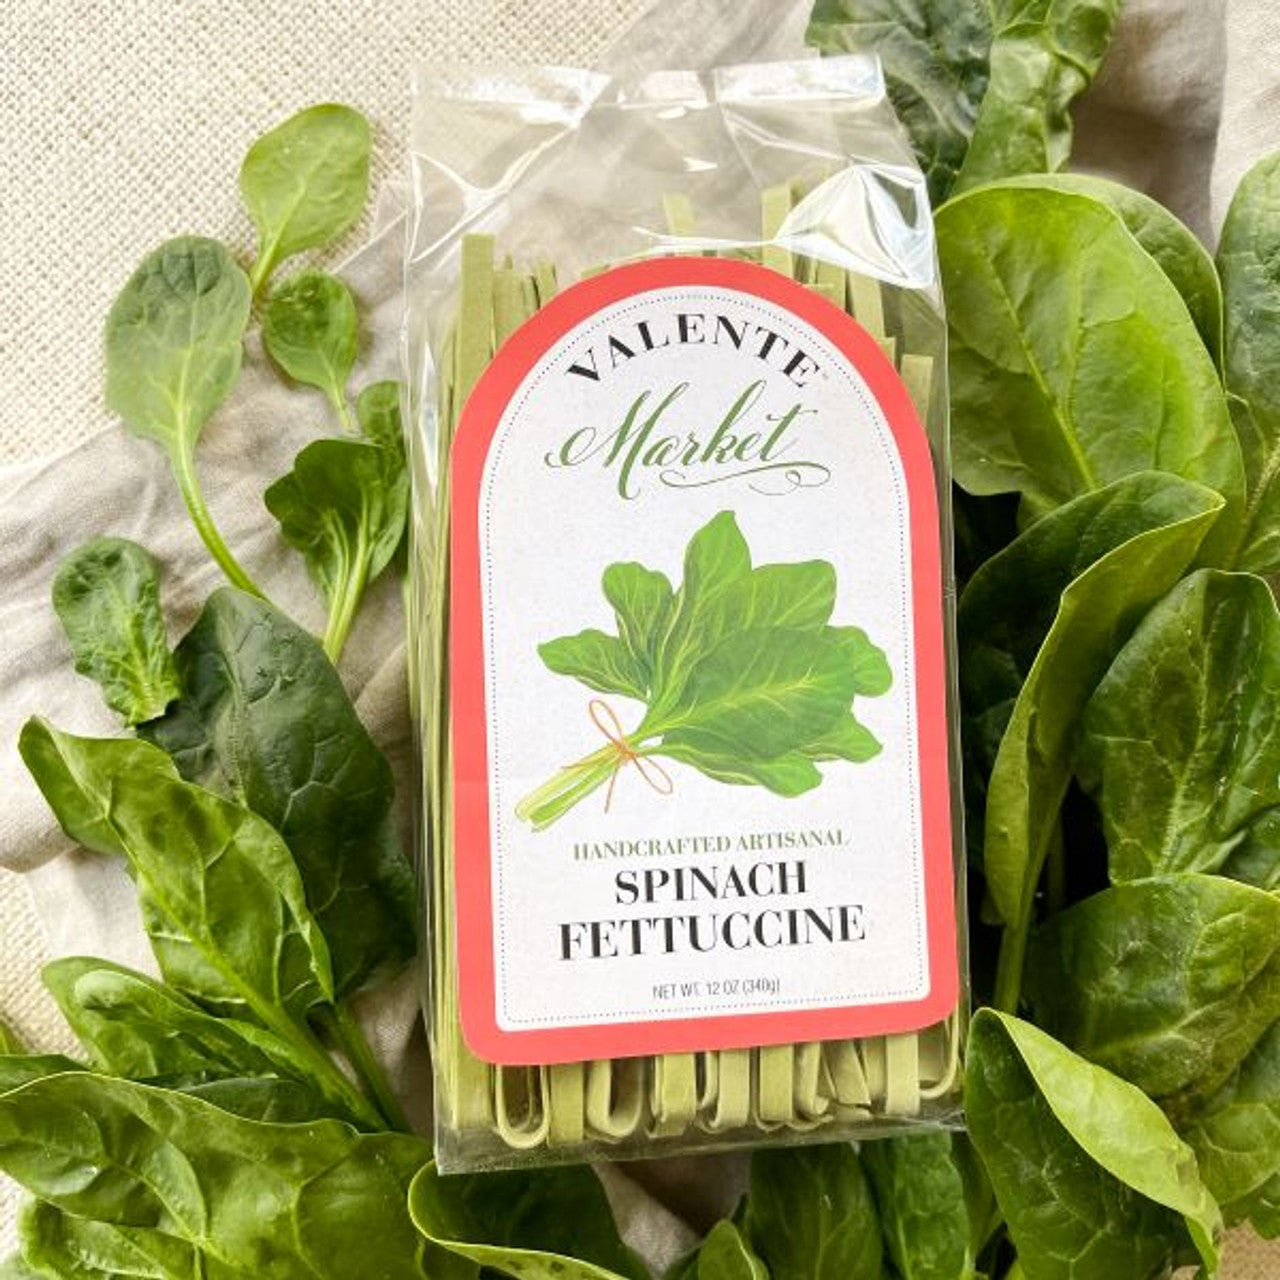 Valente Market-Spinach Fettuccine